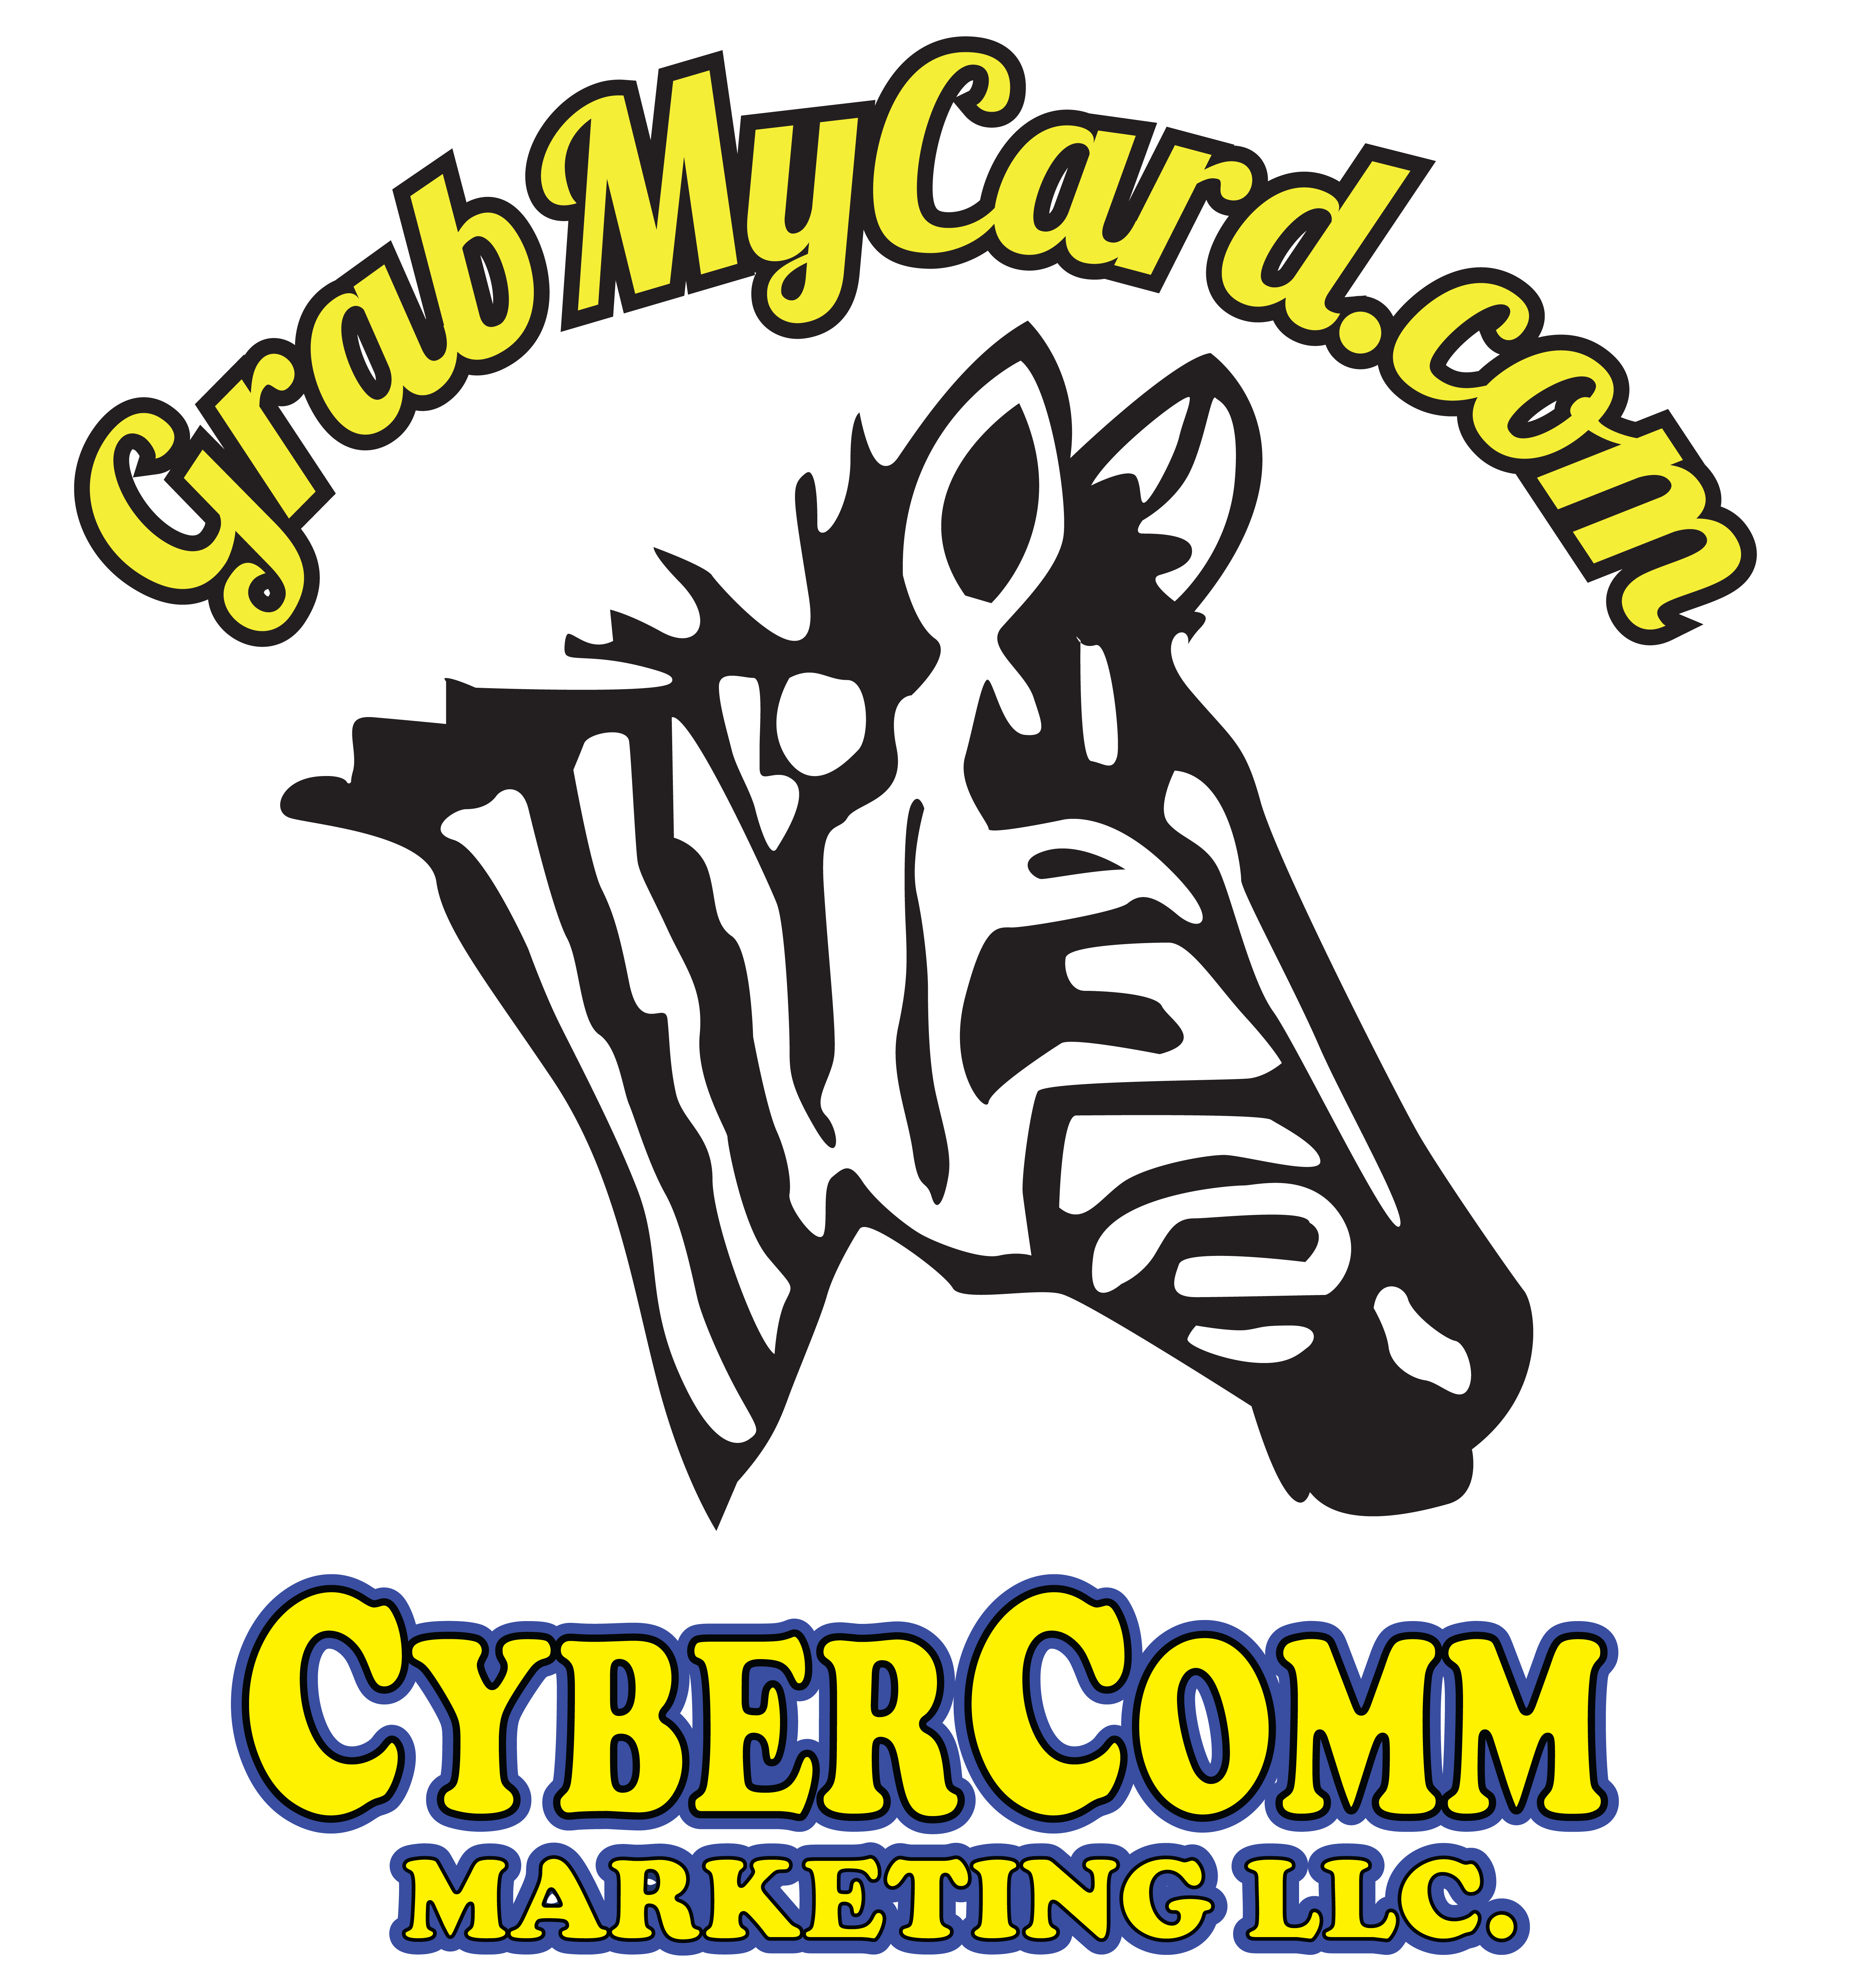 Mark Grubbs business card from CyberComm Marketing, LLC